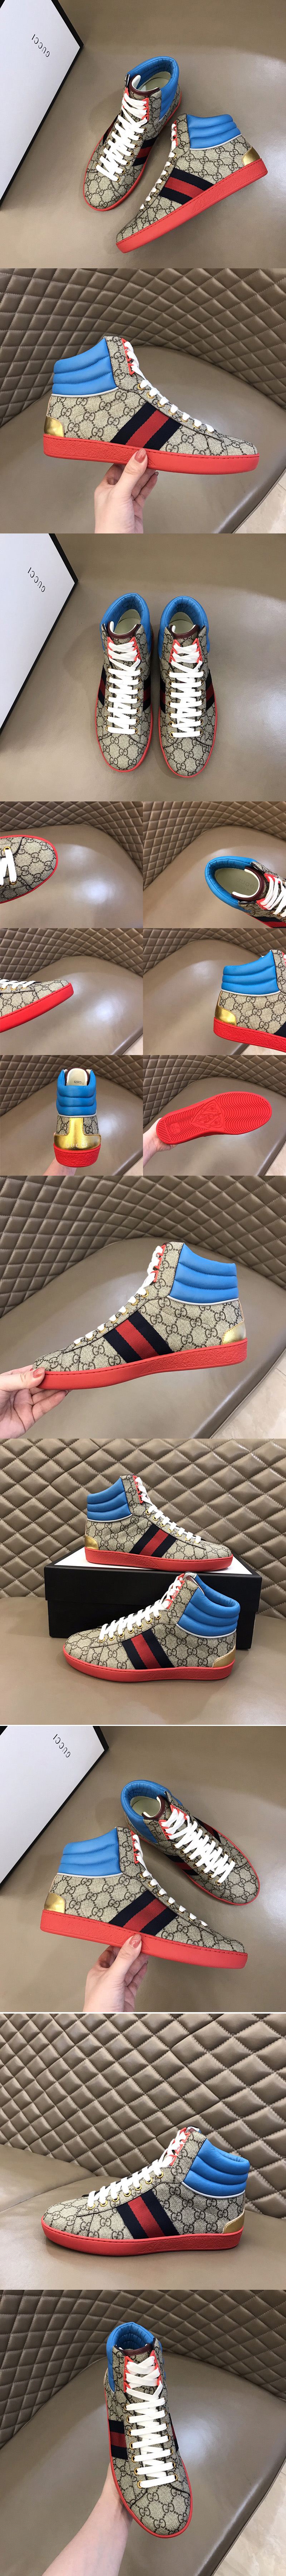 Replica Gucci 555144 Men's Ace GG high-top sneaker in Beige/ebony GG Supreme canvas